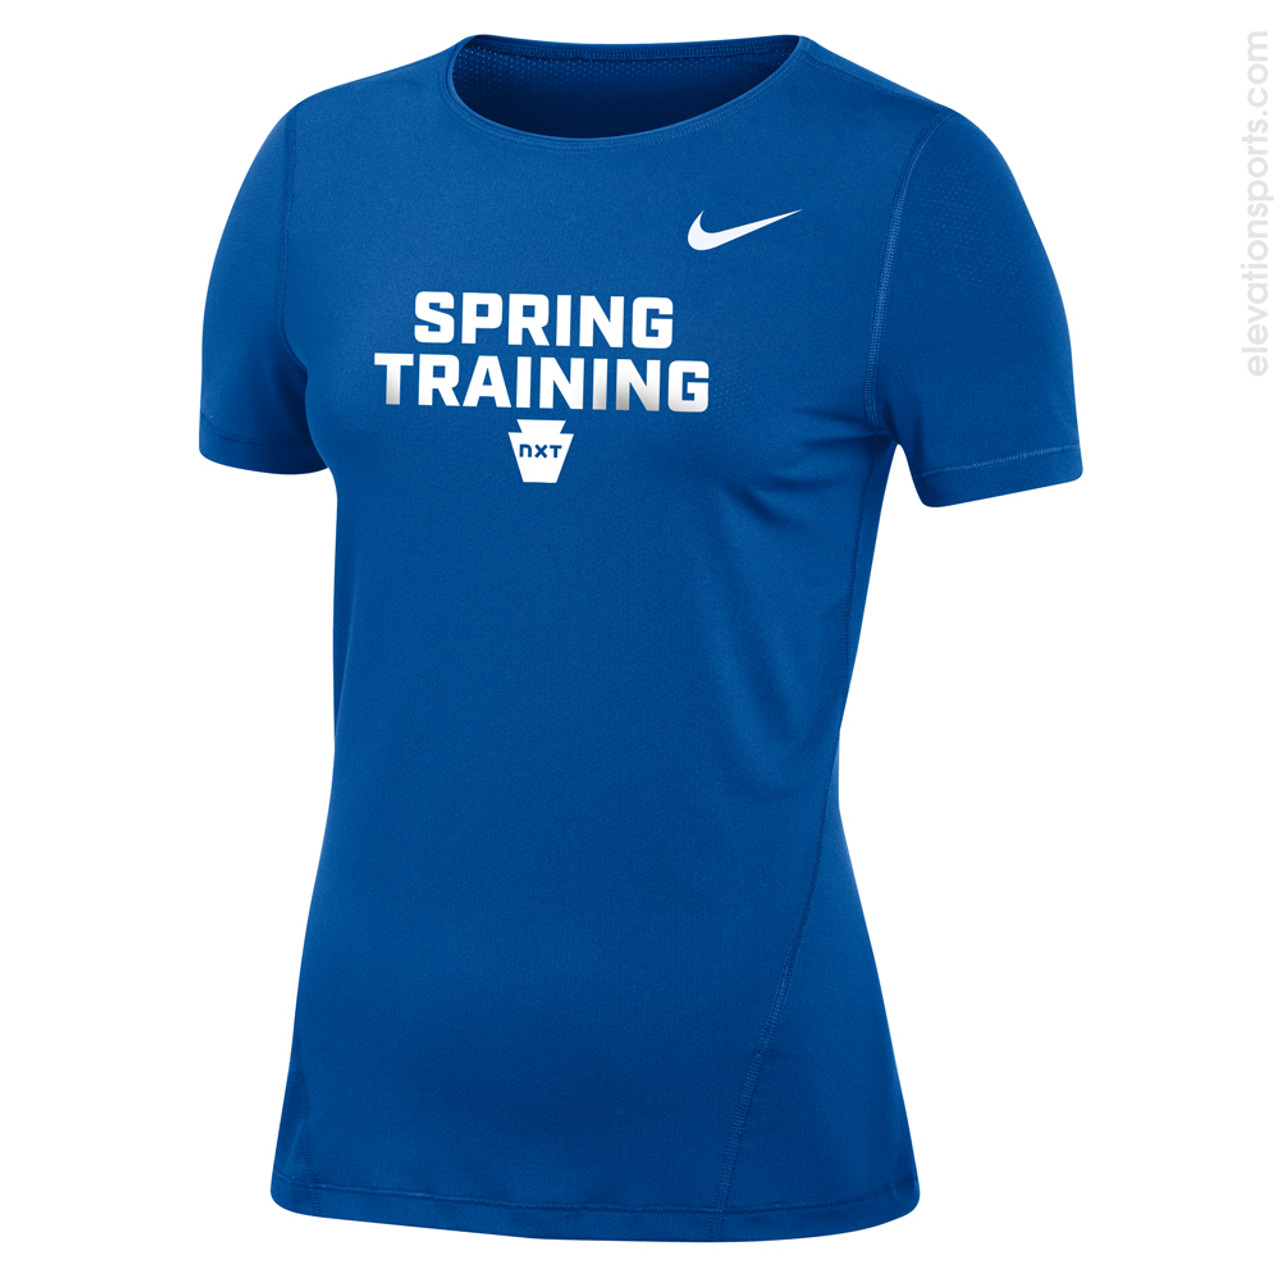 Nike Women's Dri-Fit Pro 3 Compression Training Shorts-Purple/Black 